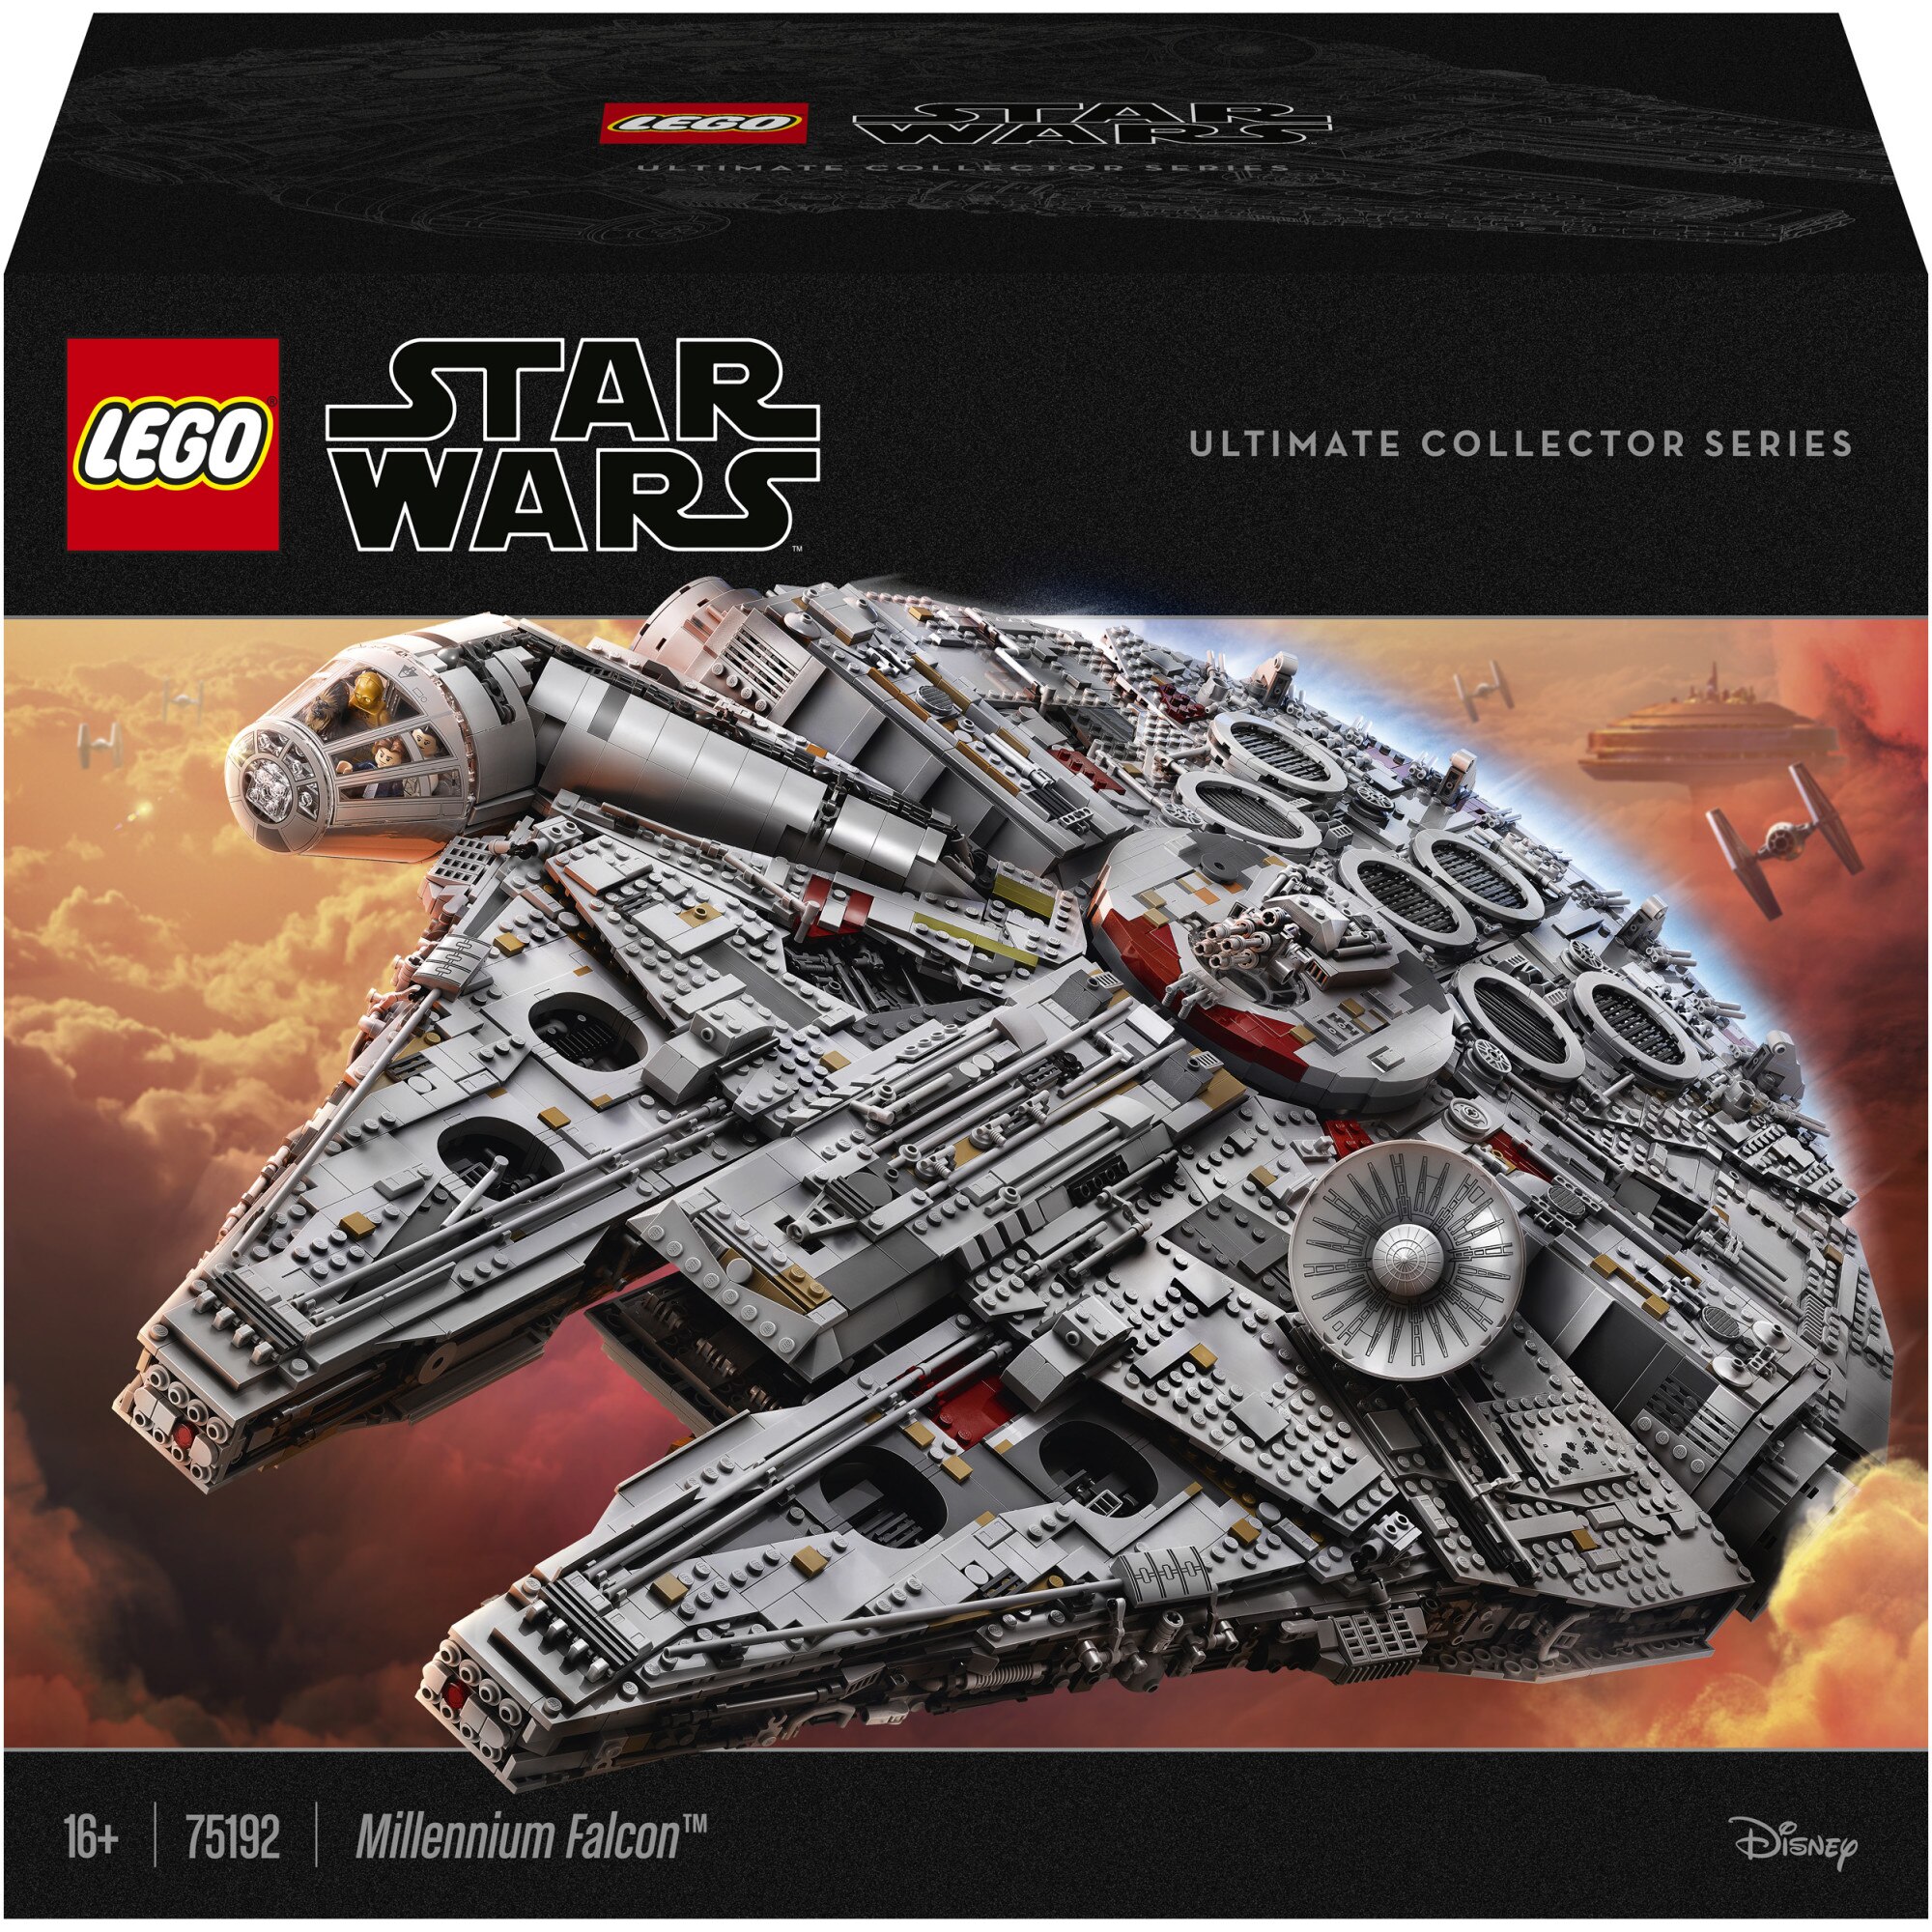 Fotografie LEGO Star Wars - Millennium Falcon 75192, 7541 piese